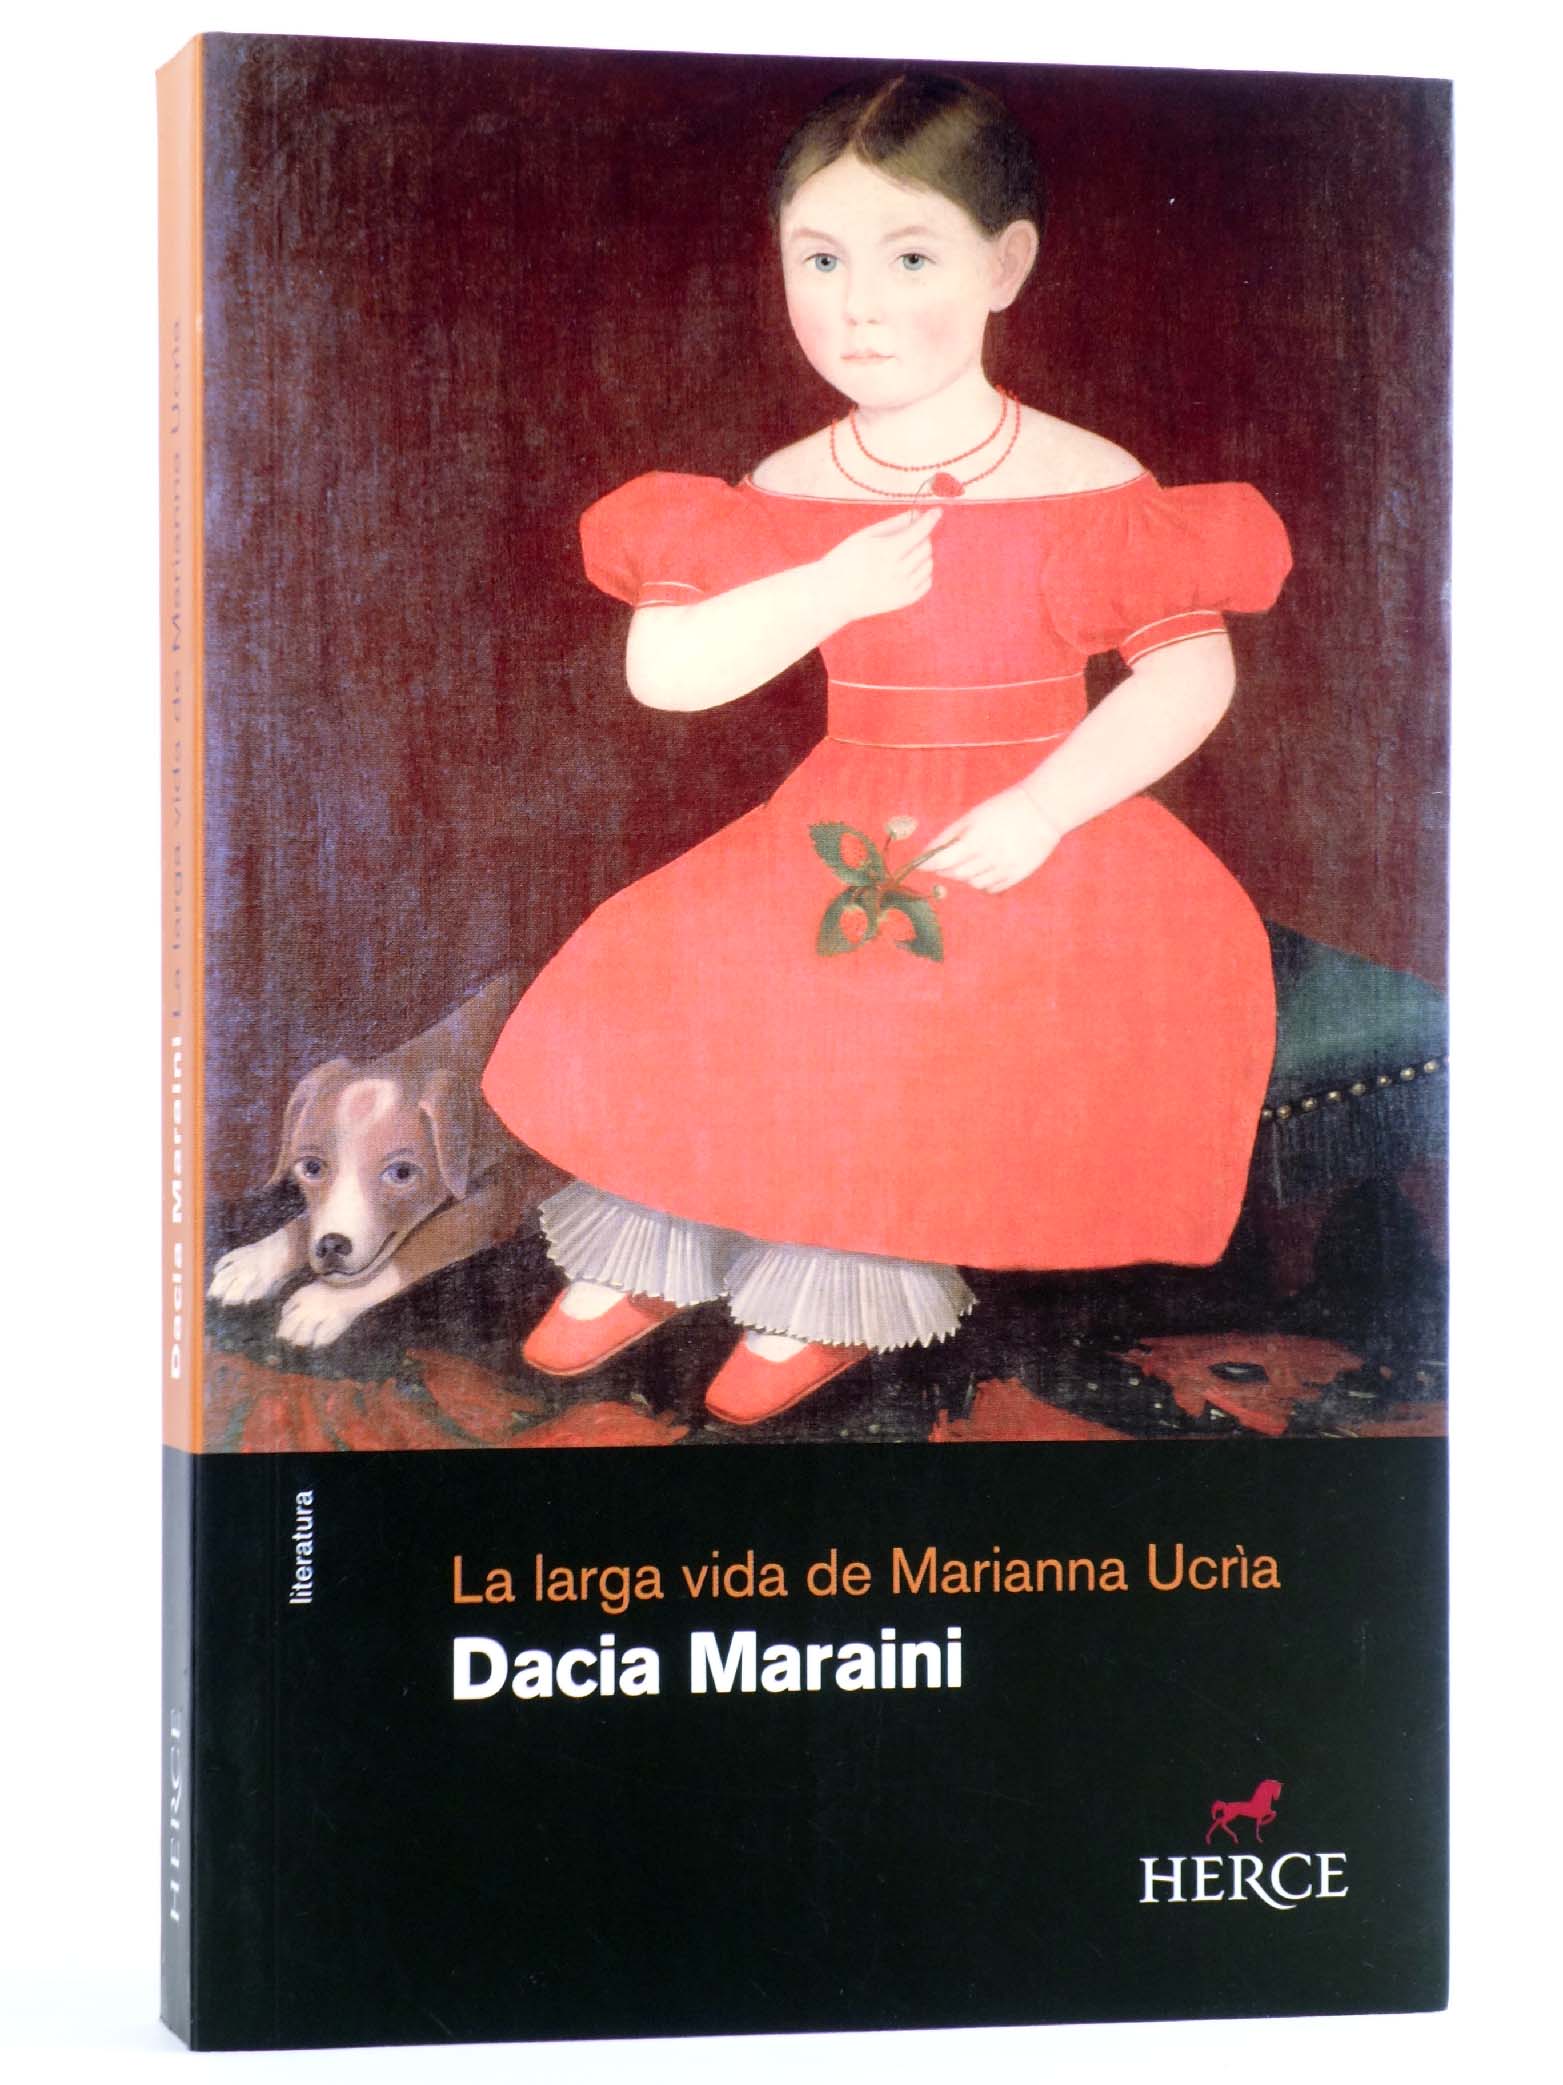 LA LARGA VIDA DE MARIANNA UCRÌA (Dacia Maraini) Herce, 2008. OFRT - Dacia Maraini